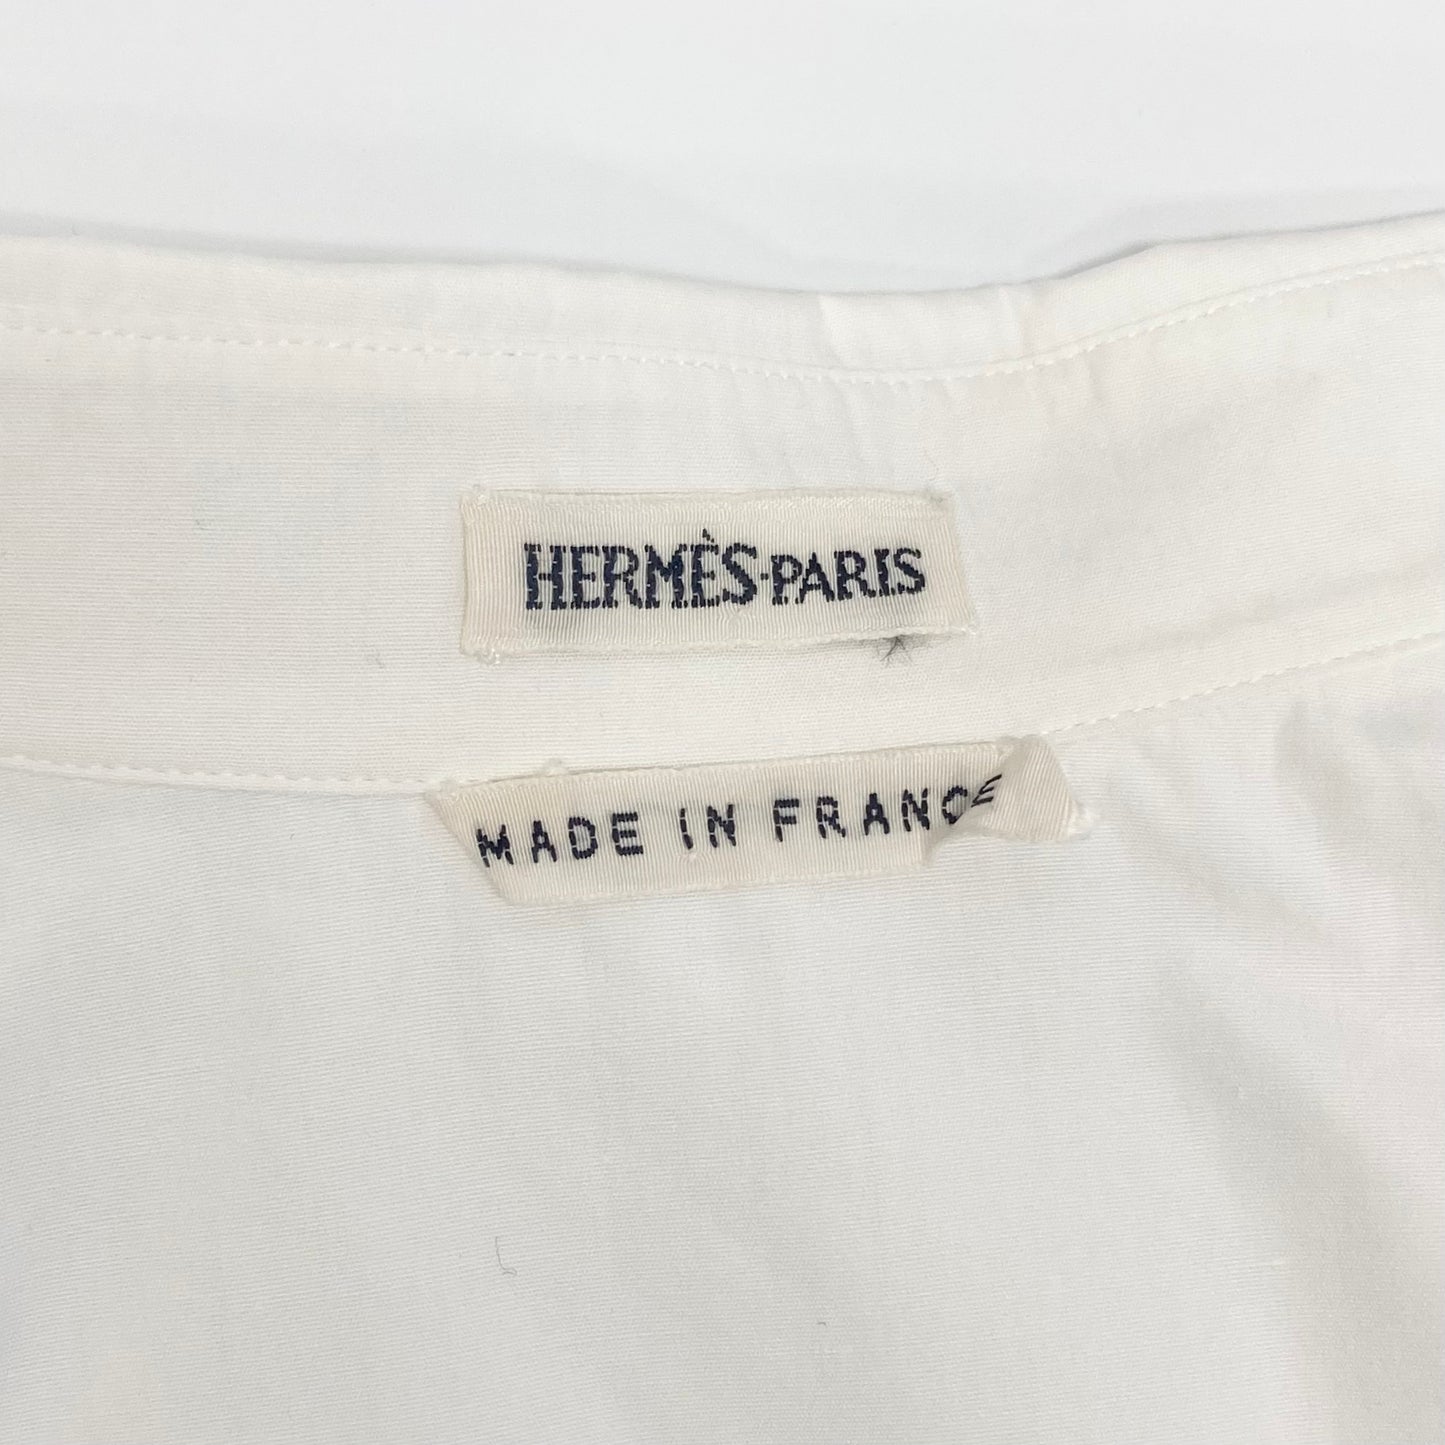 Spring1999 Hermès by Martin Margiela Vareuse shirt